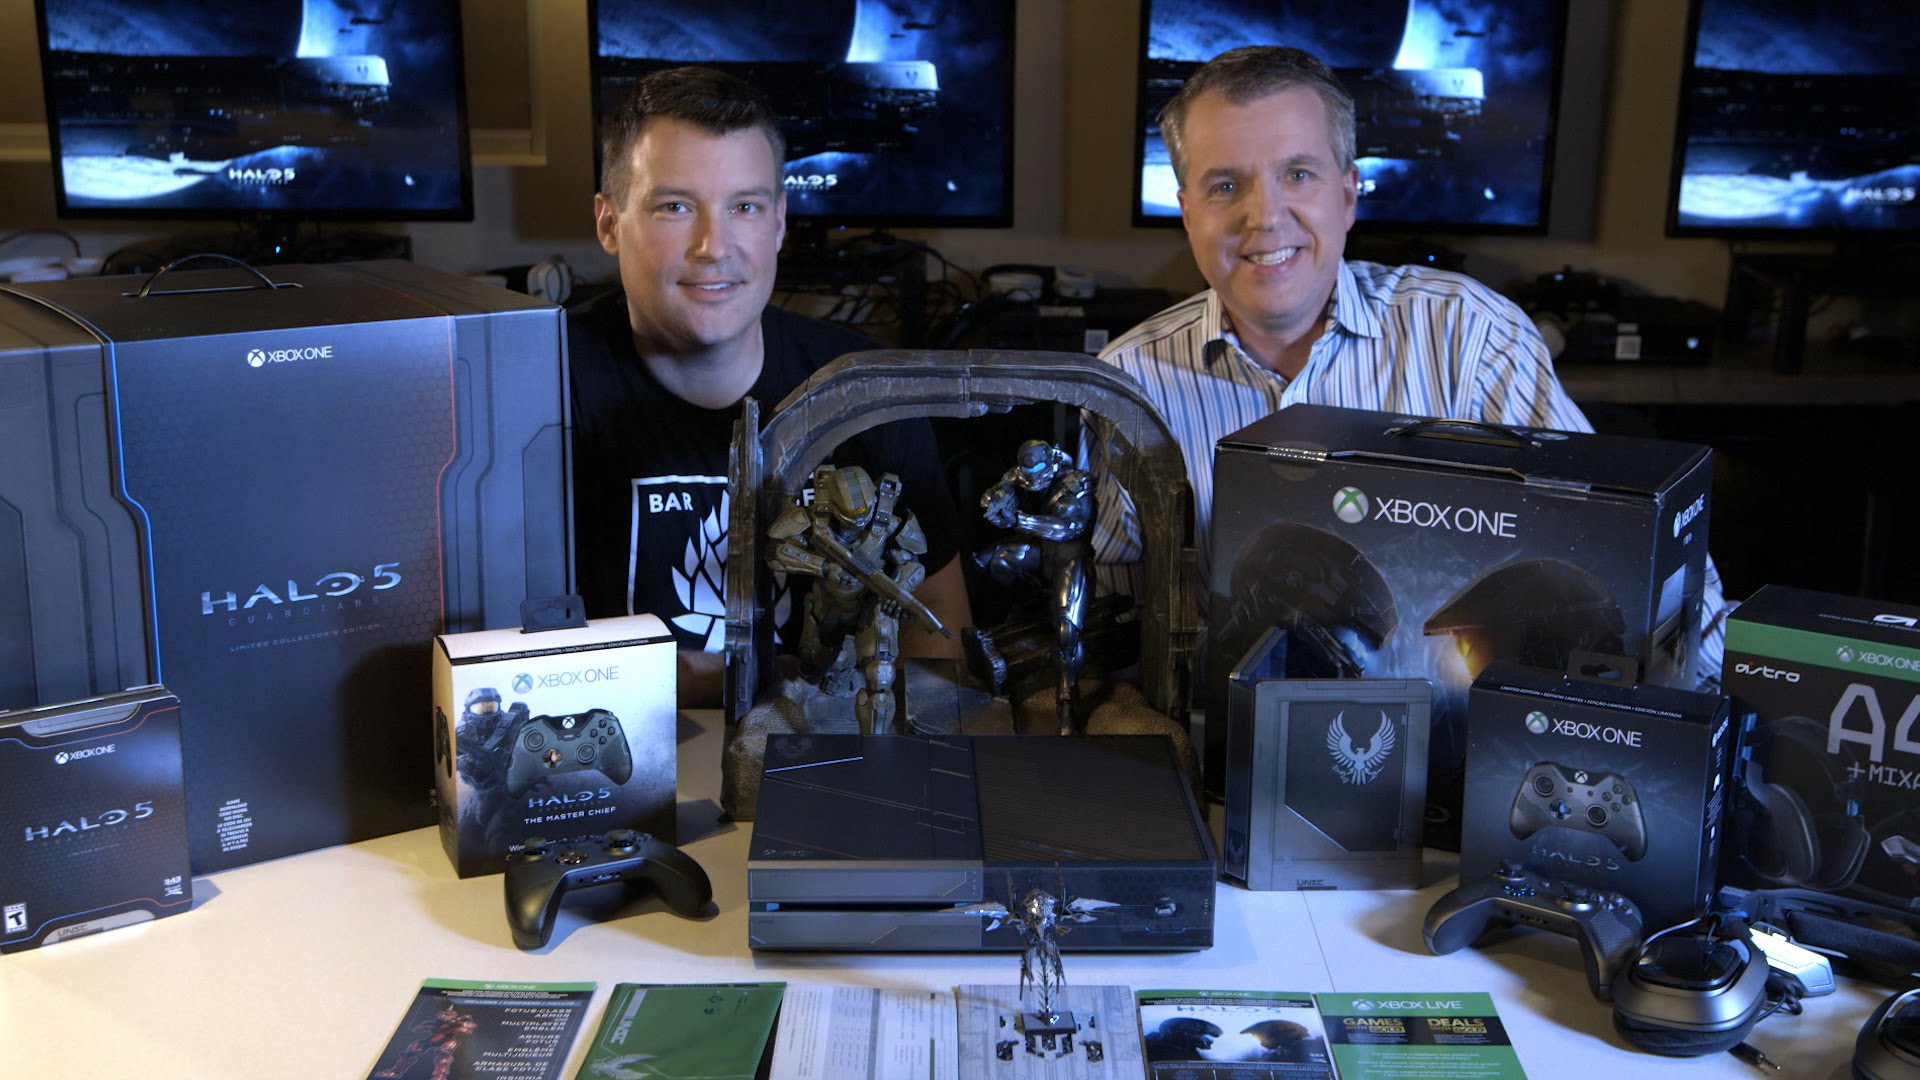 Halo 5: Guardians – Xbox One